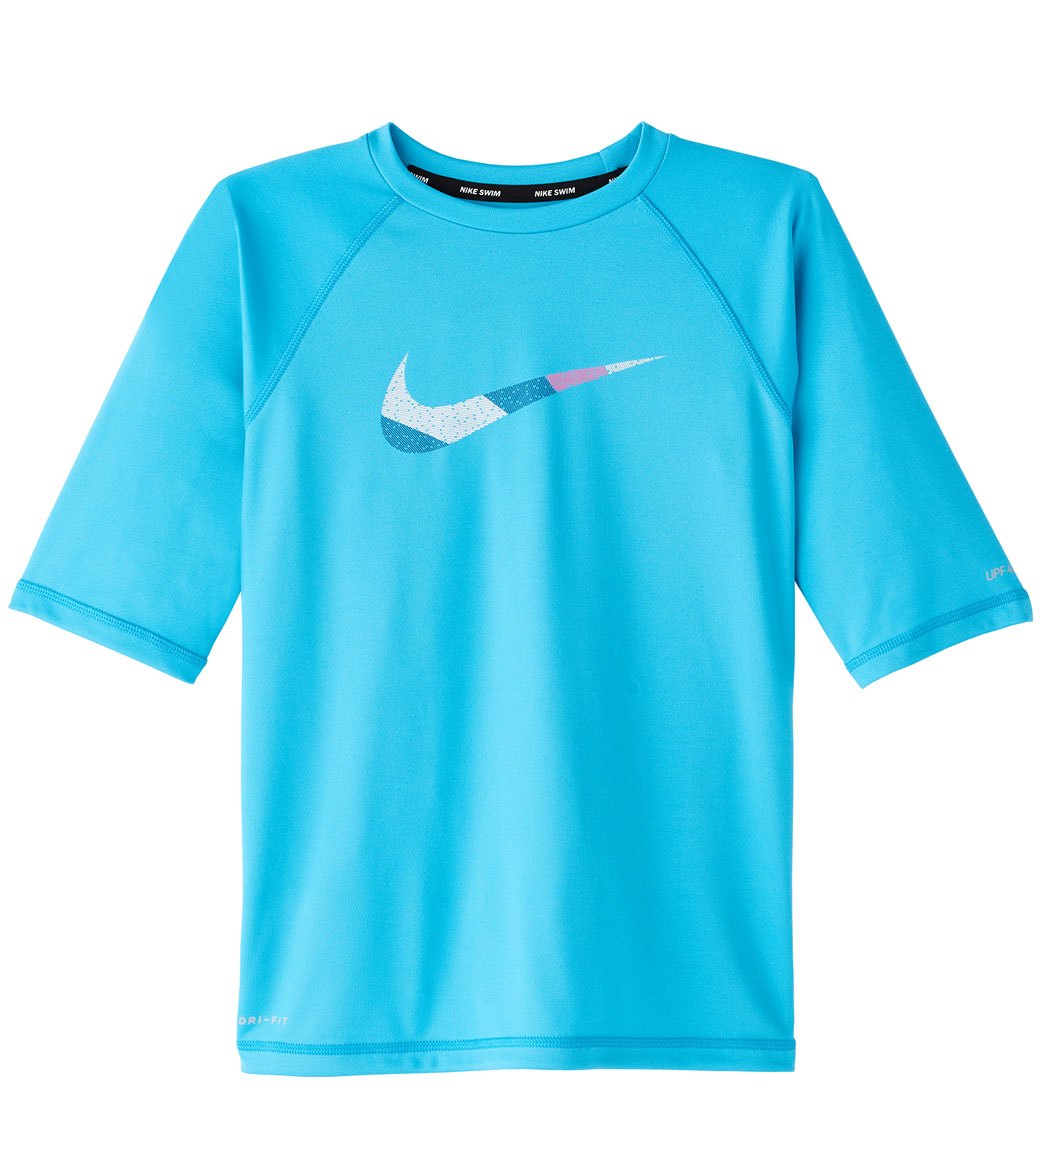 Nike Boys' Mash Up 1/2 Sleeve Swim Shirt (Big Kid) at SwimOutlet.com